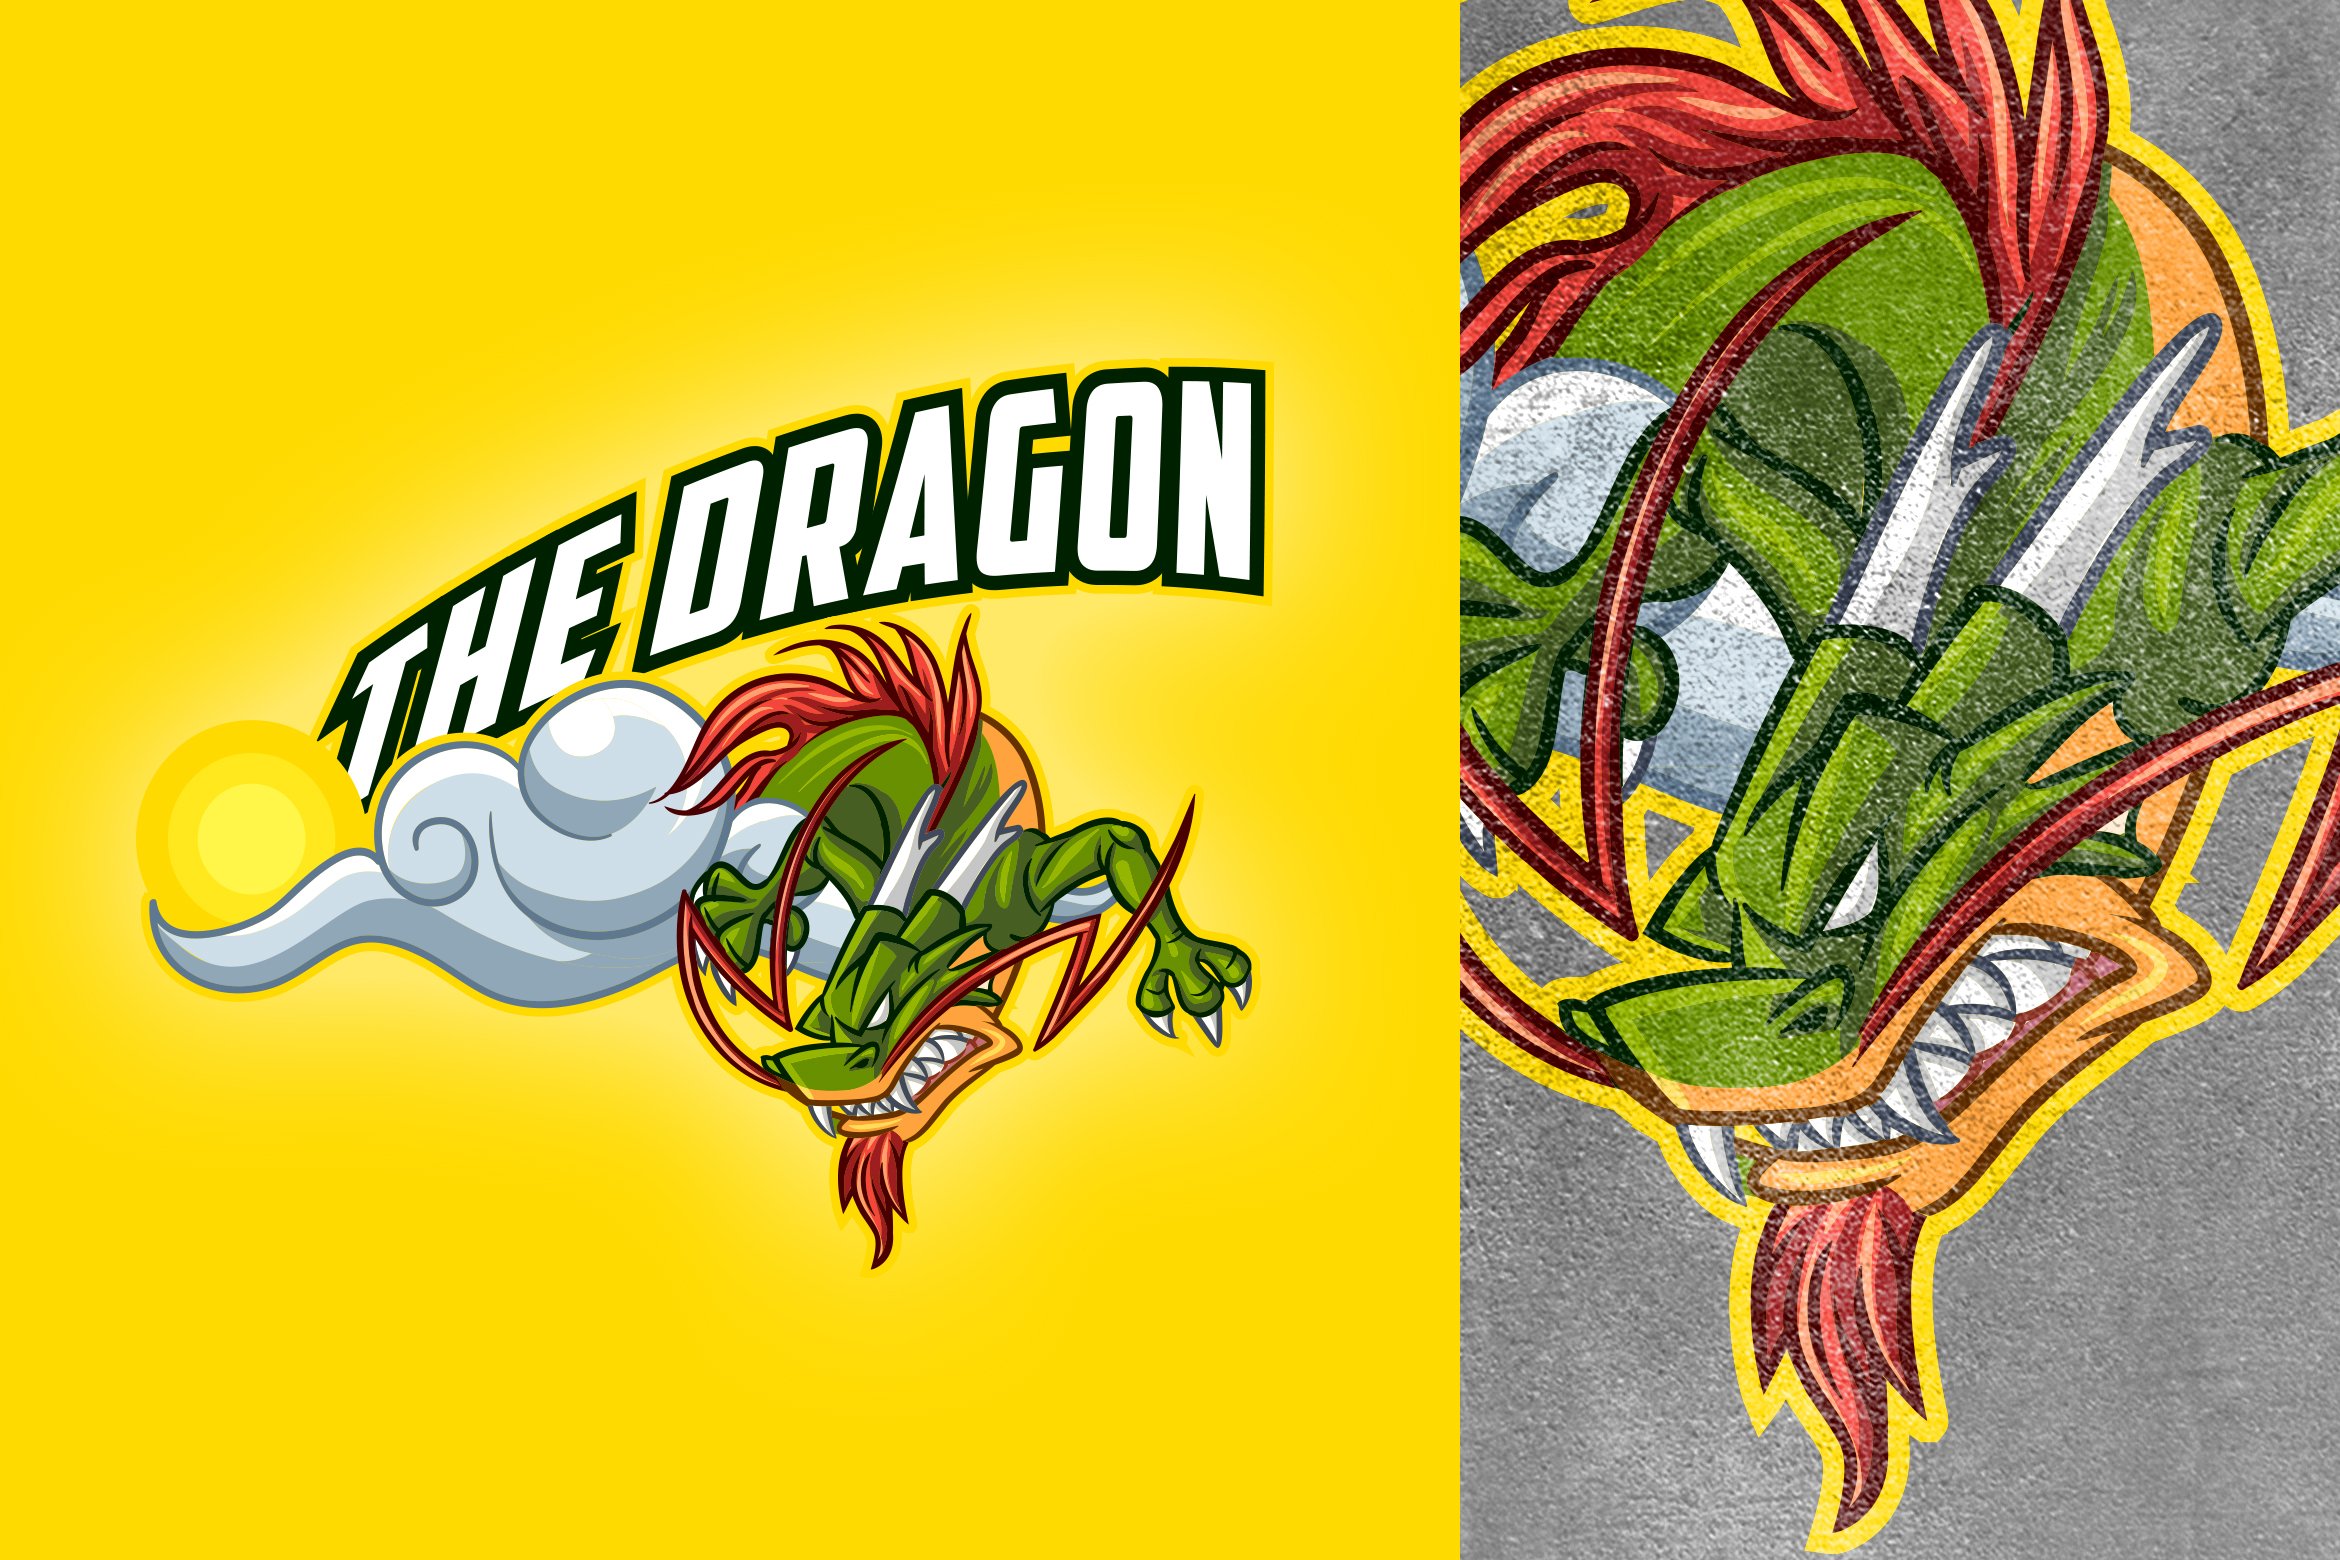 The Dragon Mascot Logo cover image.